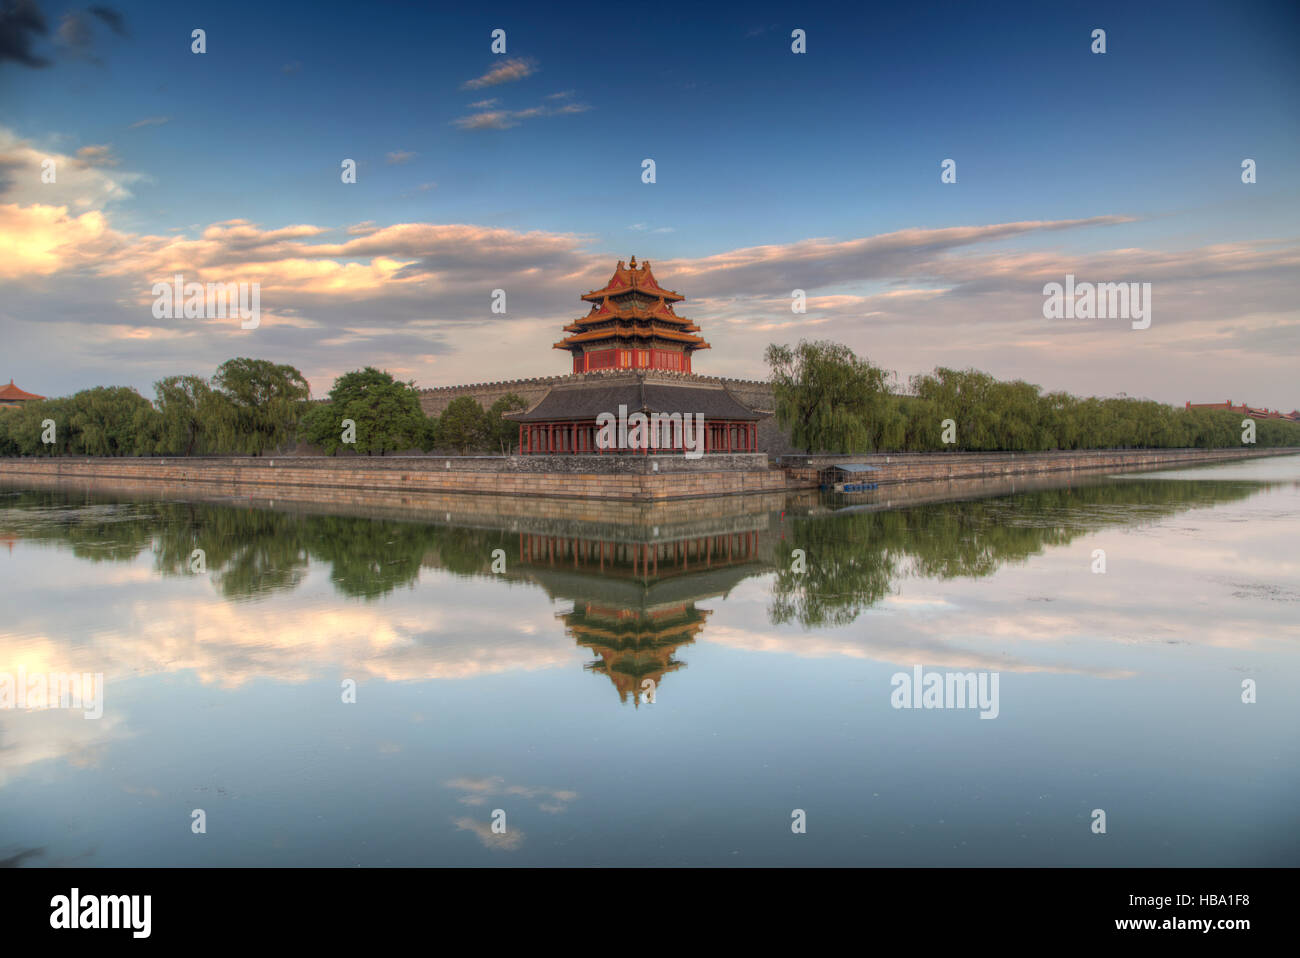 Watch Tower of the Forbidden City in Beijing Stock Photo